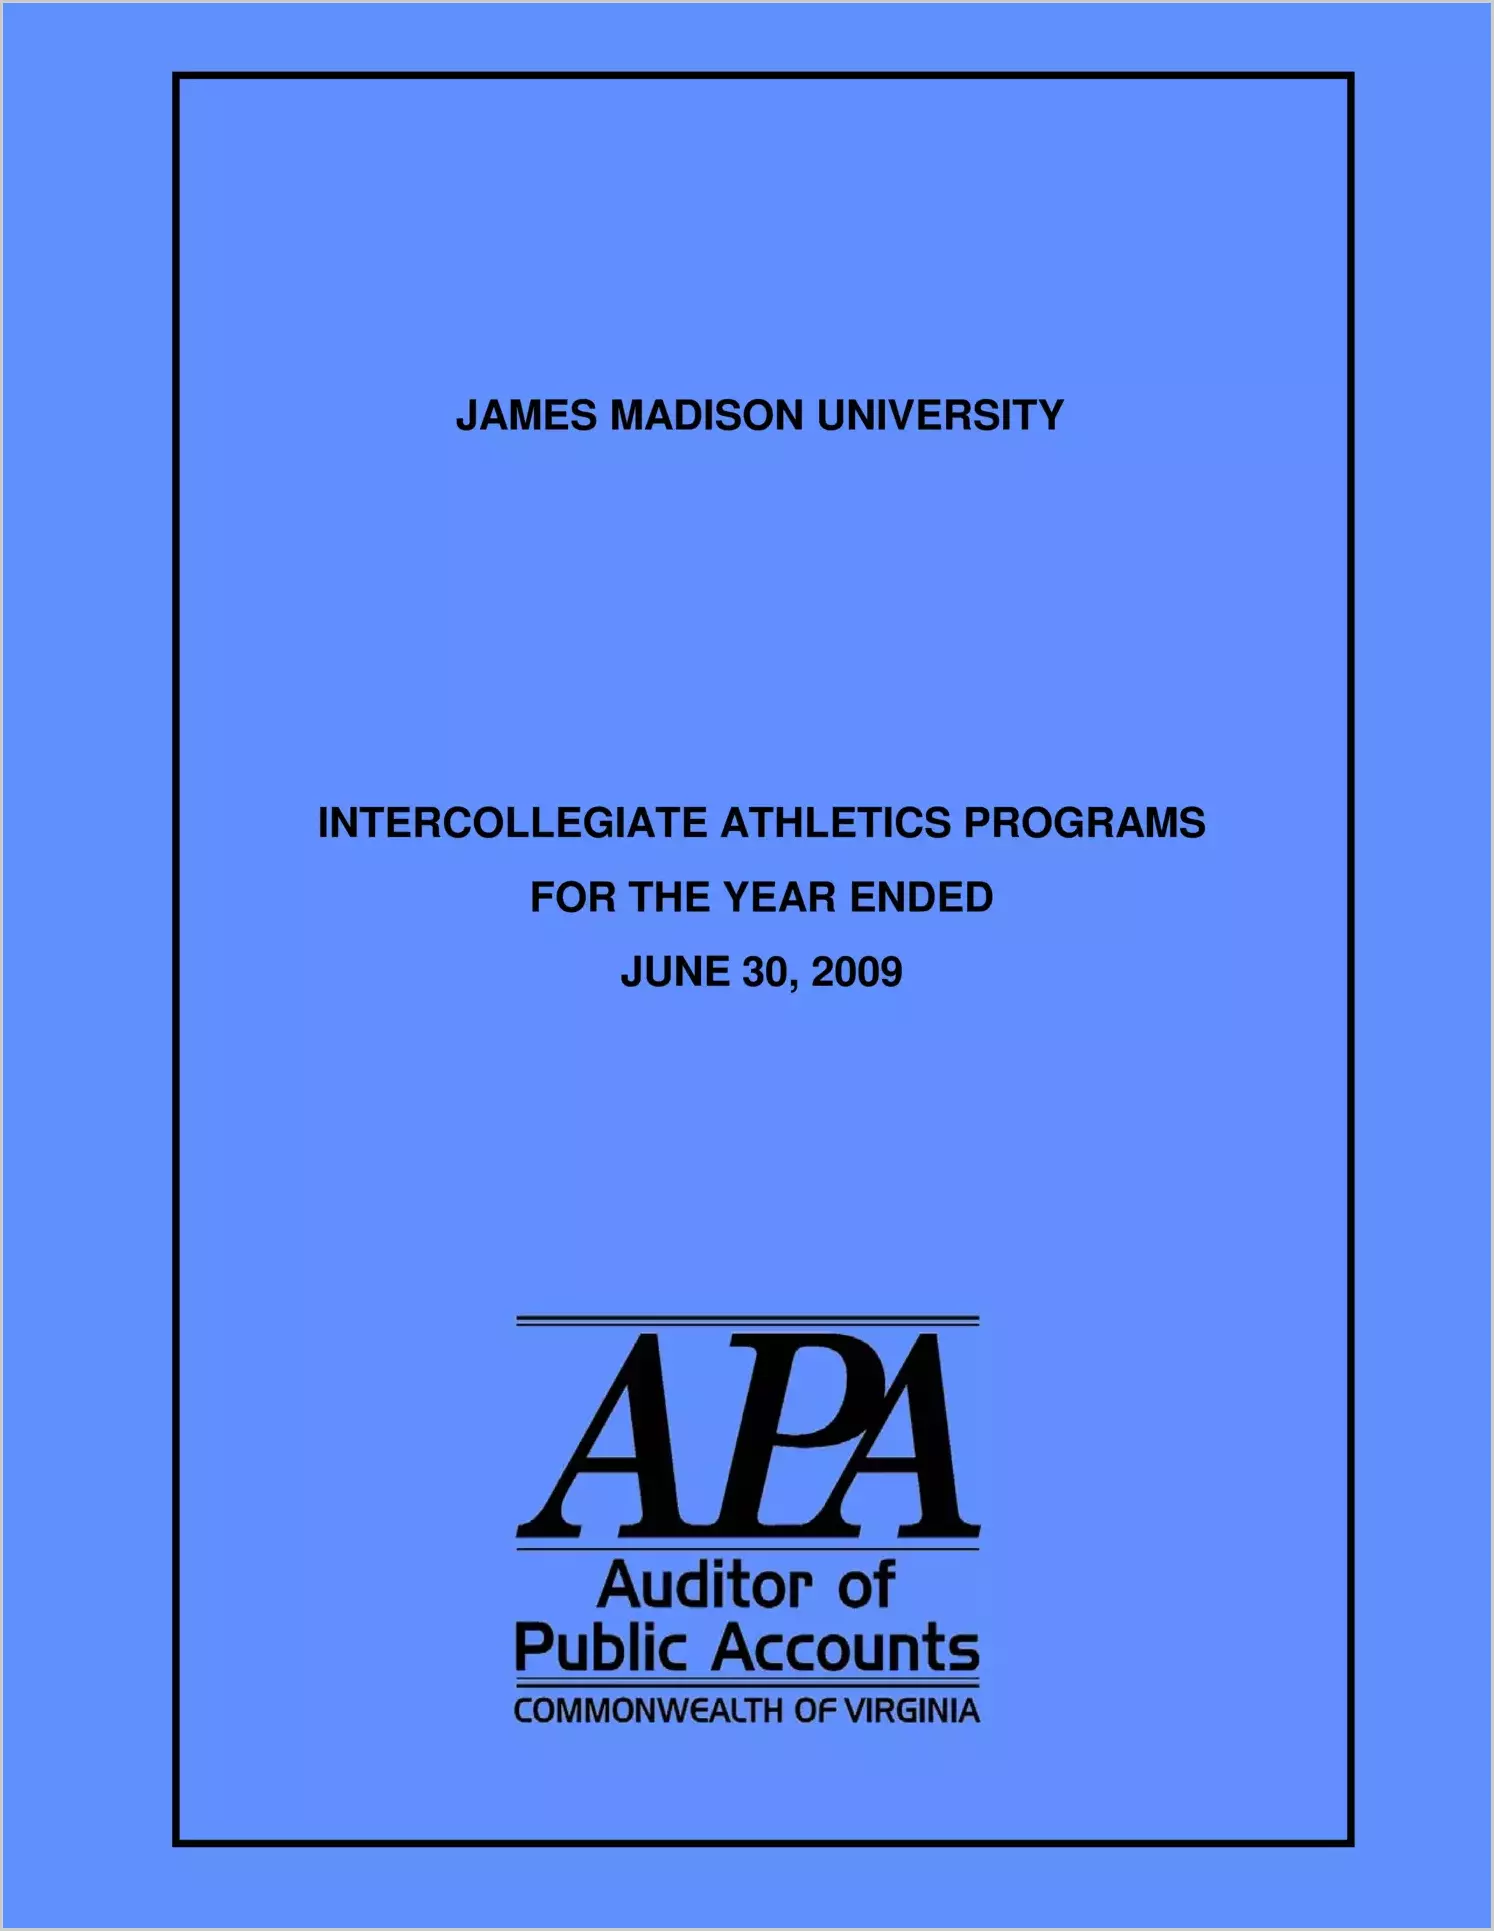 James Madison University Intercollegiate Athletics Programs for the year ended June 30, 2009